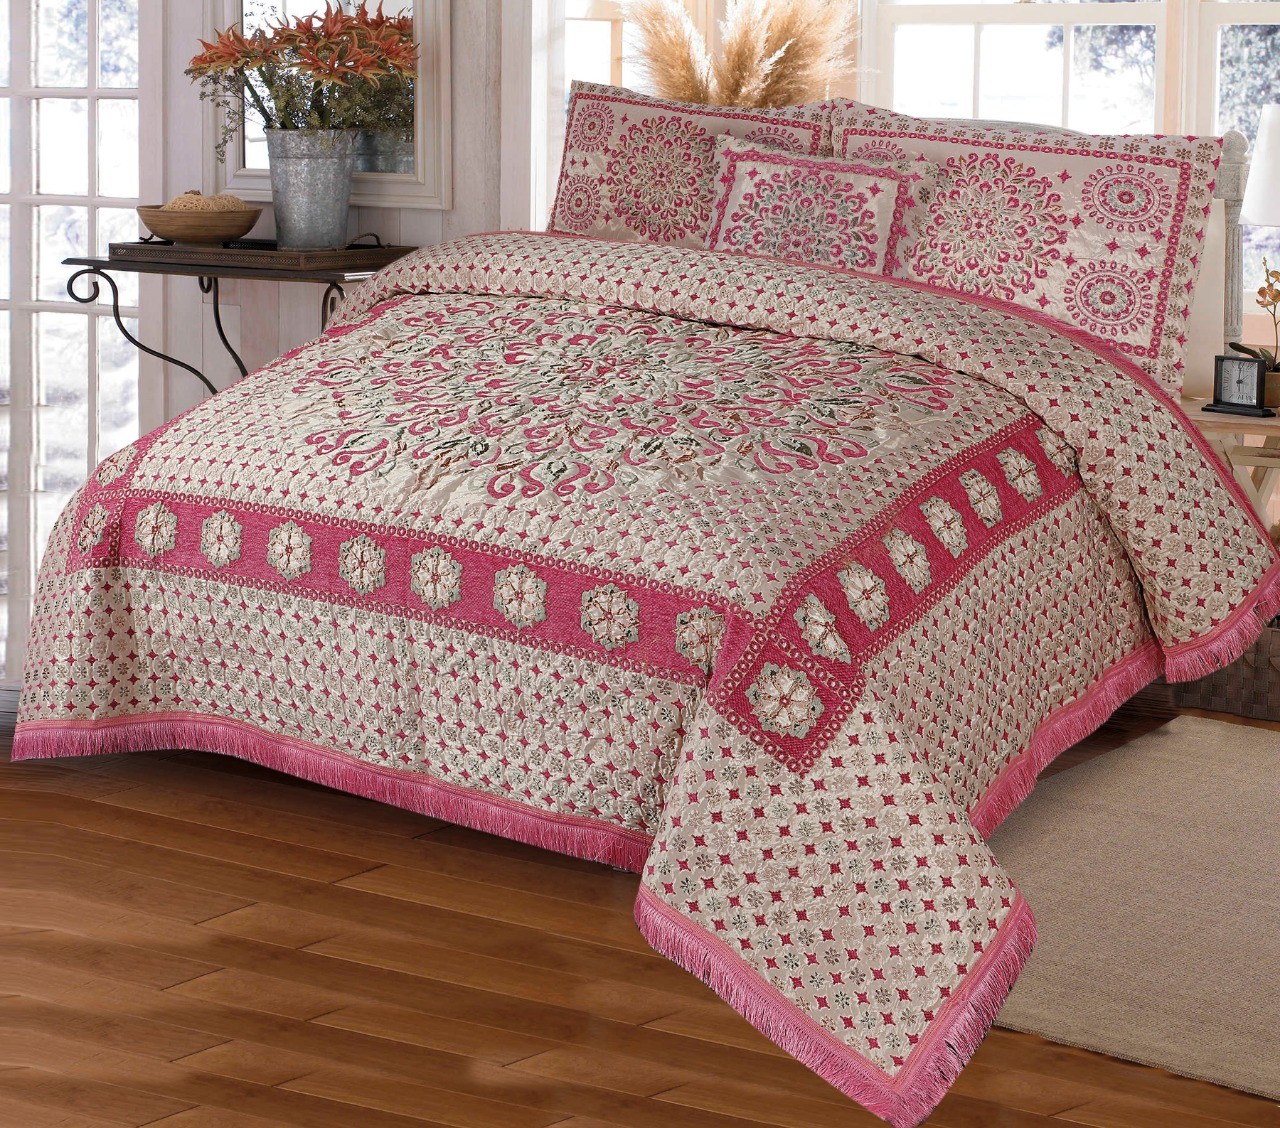 1580025504-pink-bed-sheet.jpeg